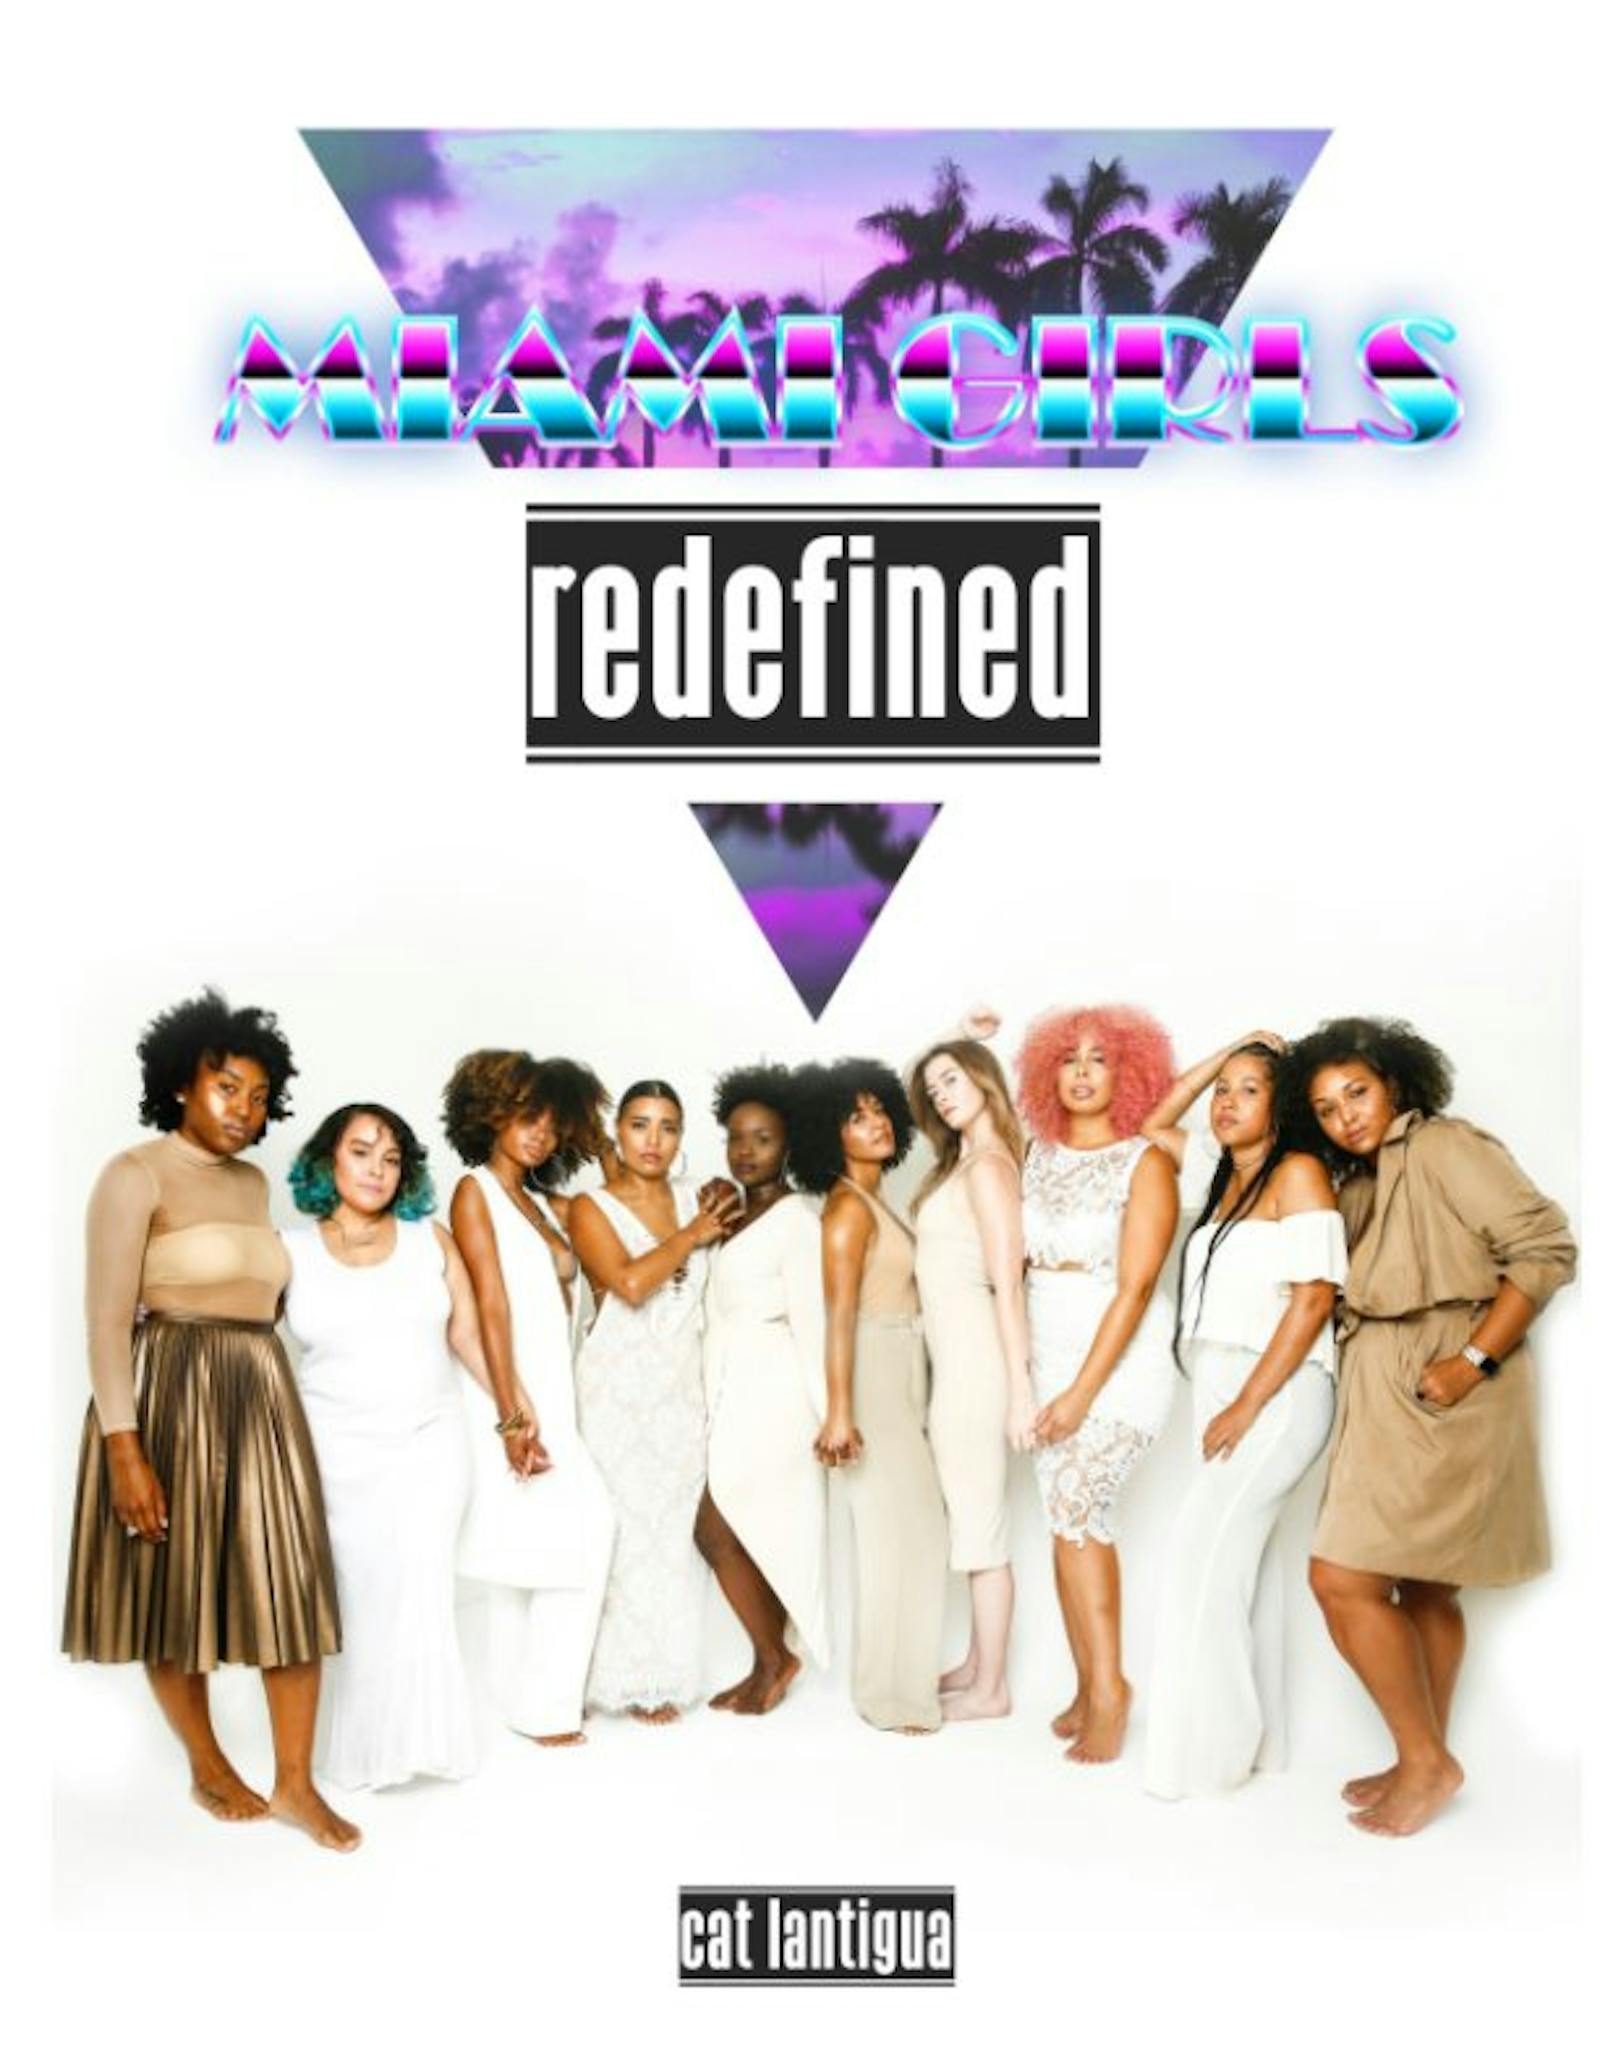 'Miami Girls Redefined' magazine